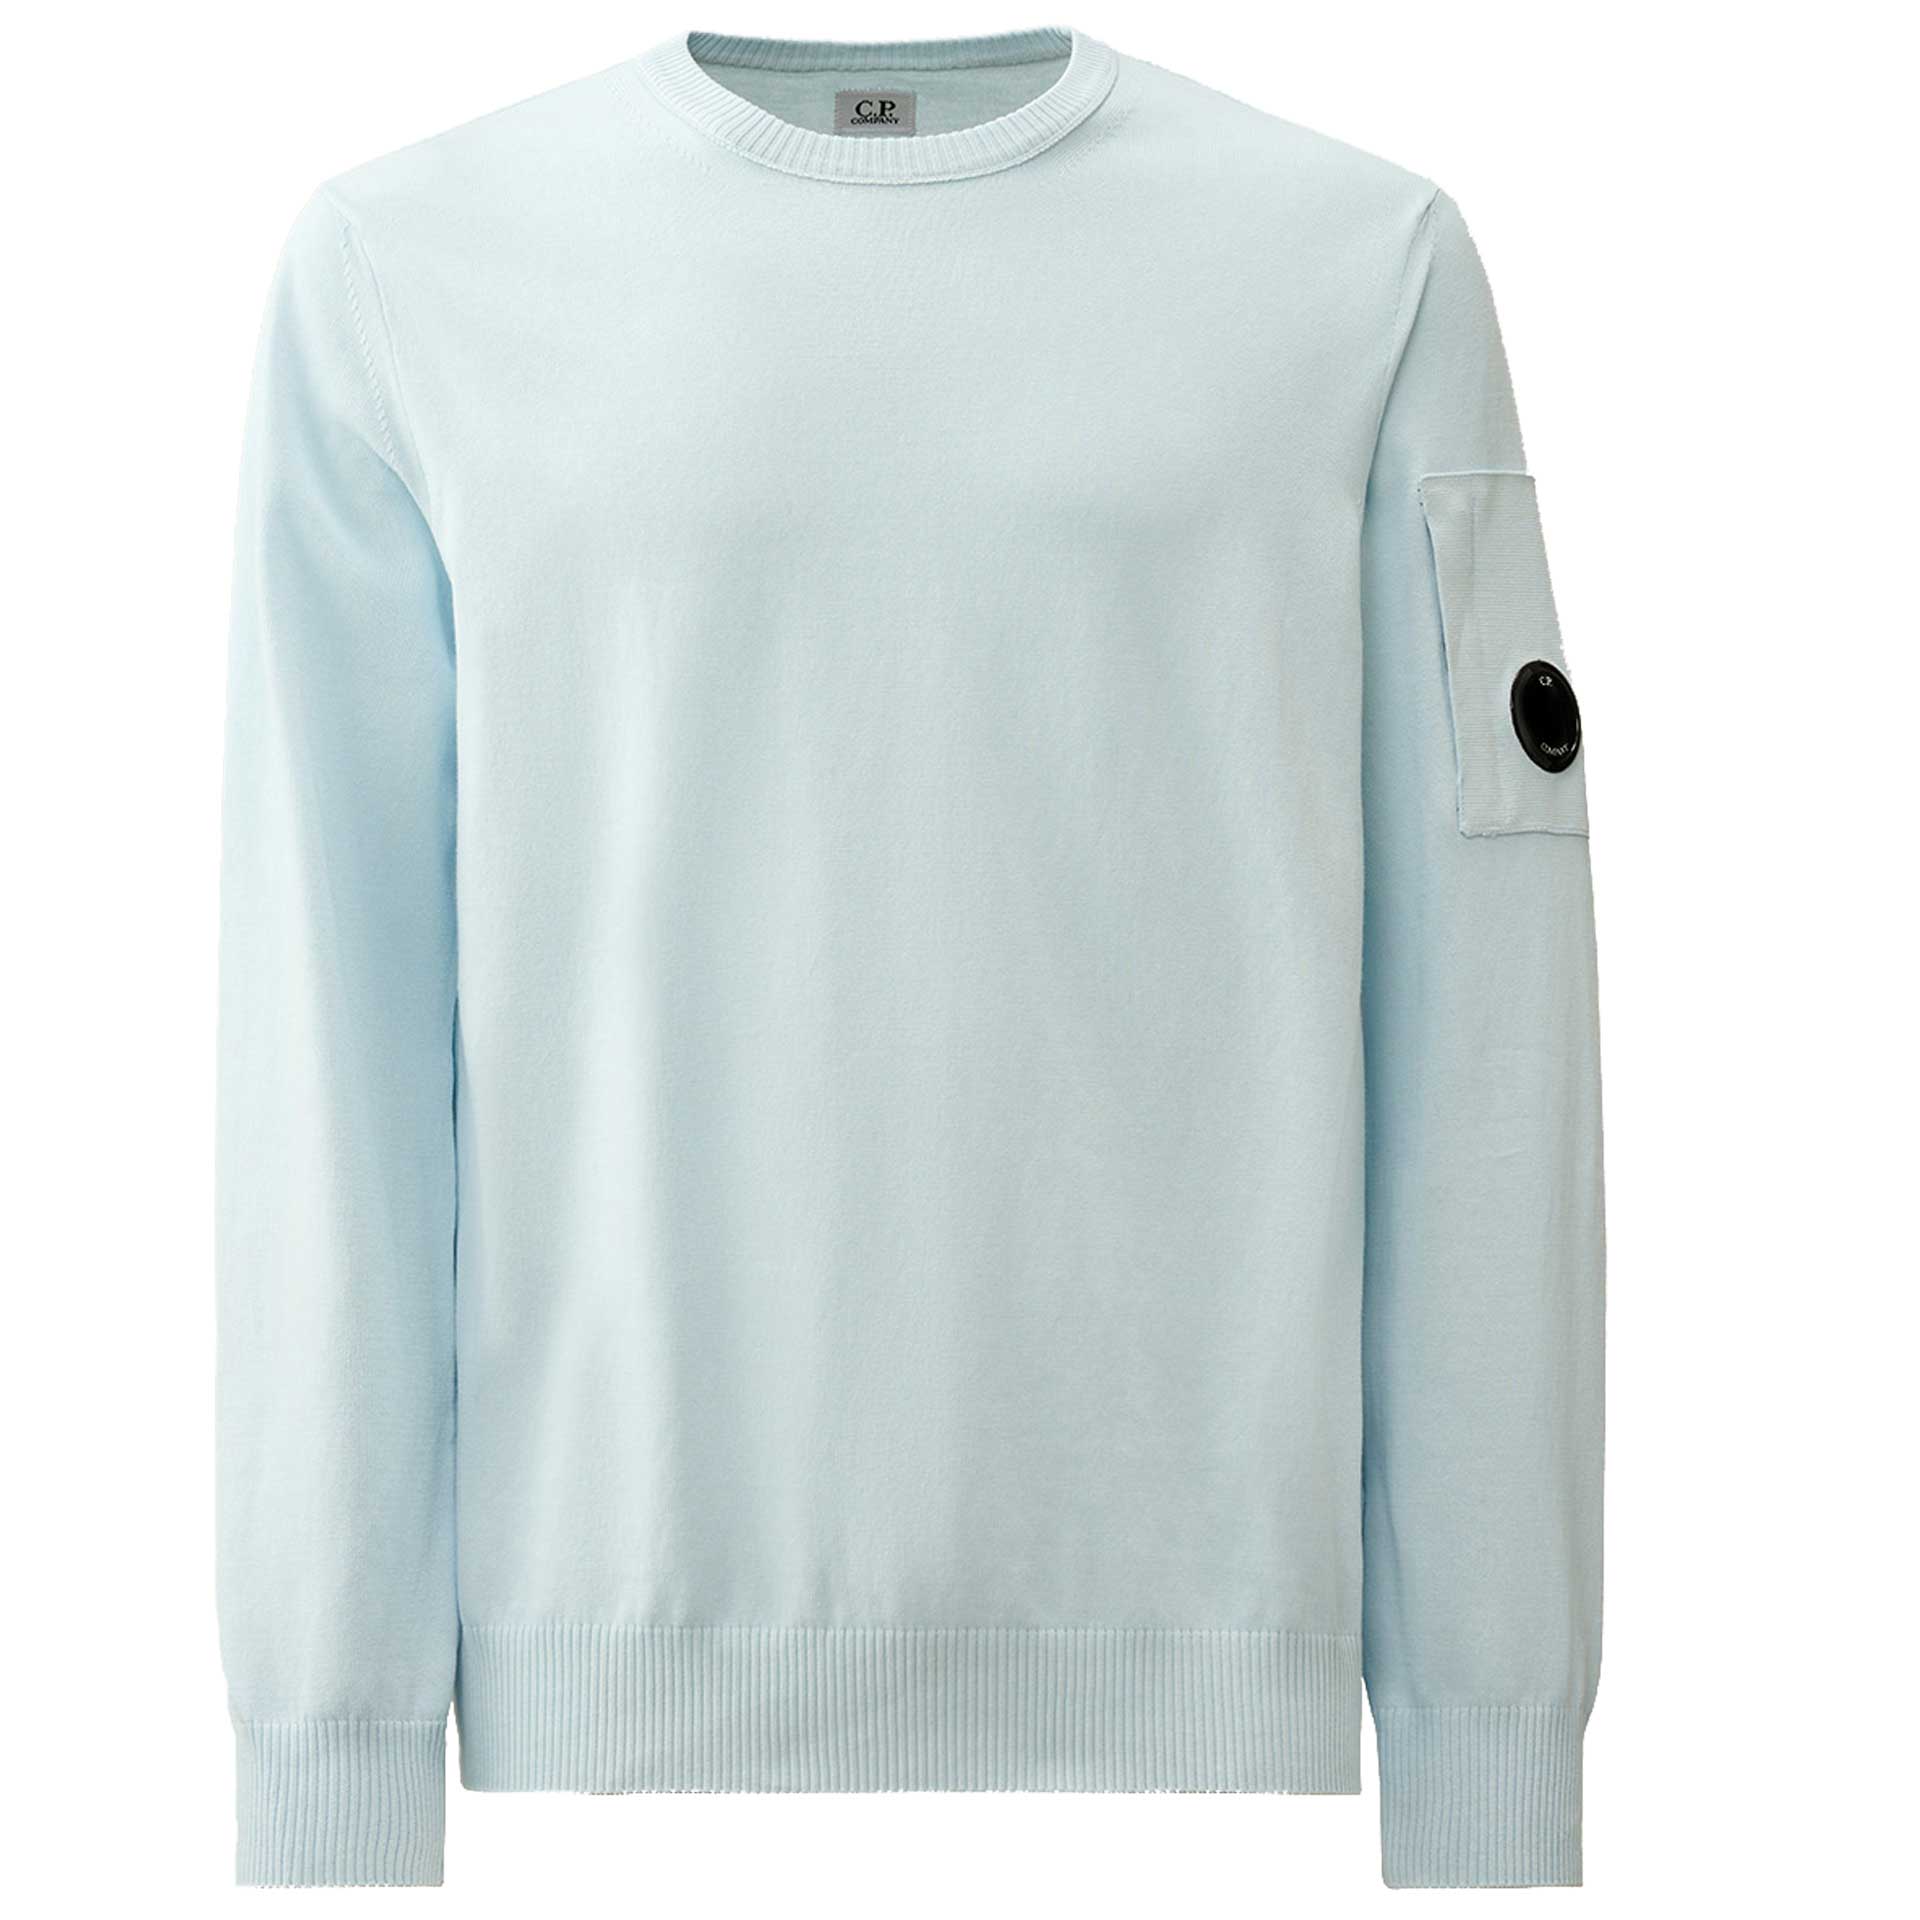 CP Company Sweater 1